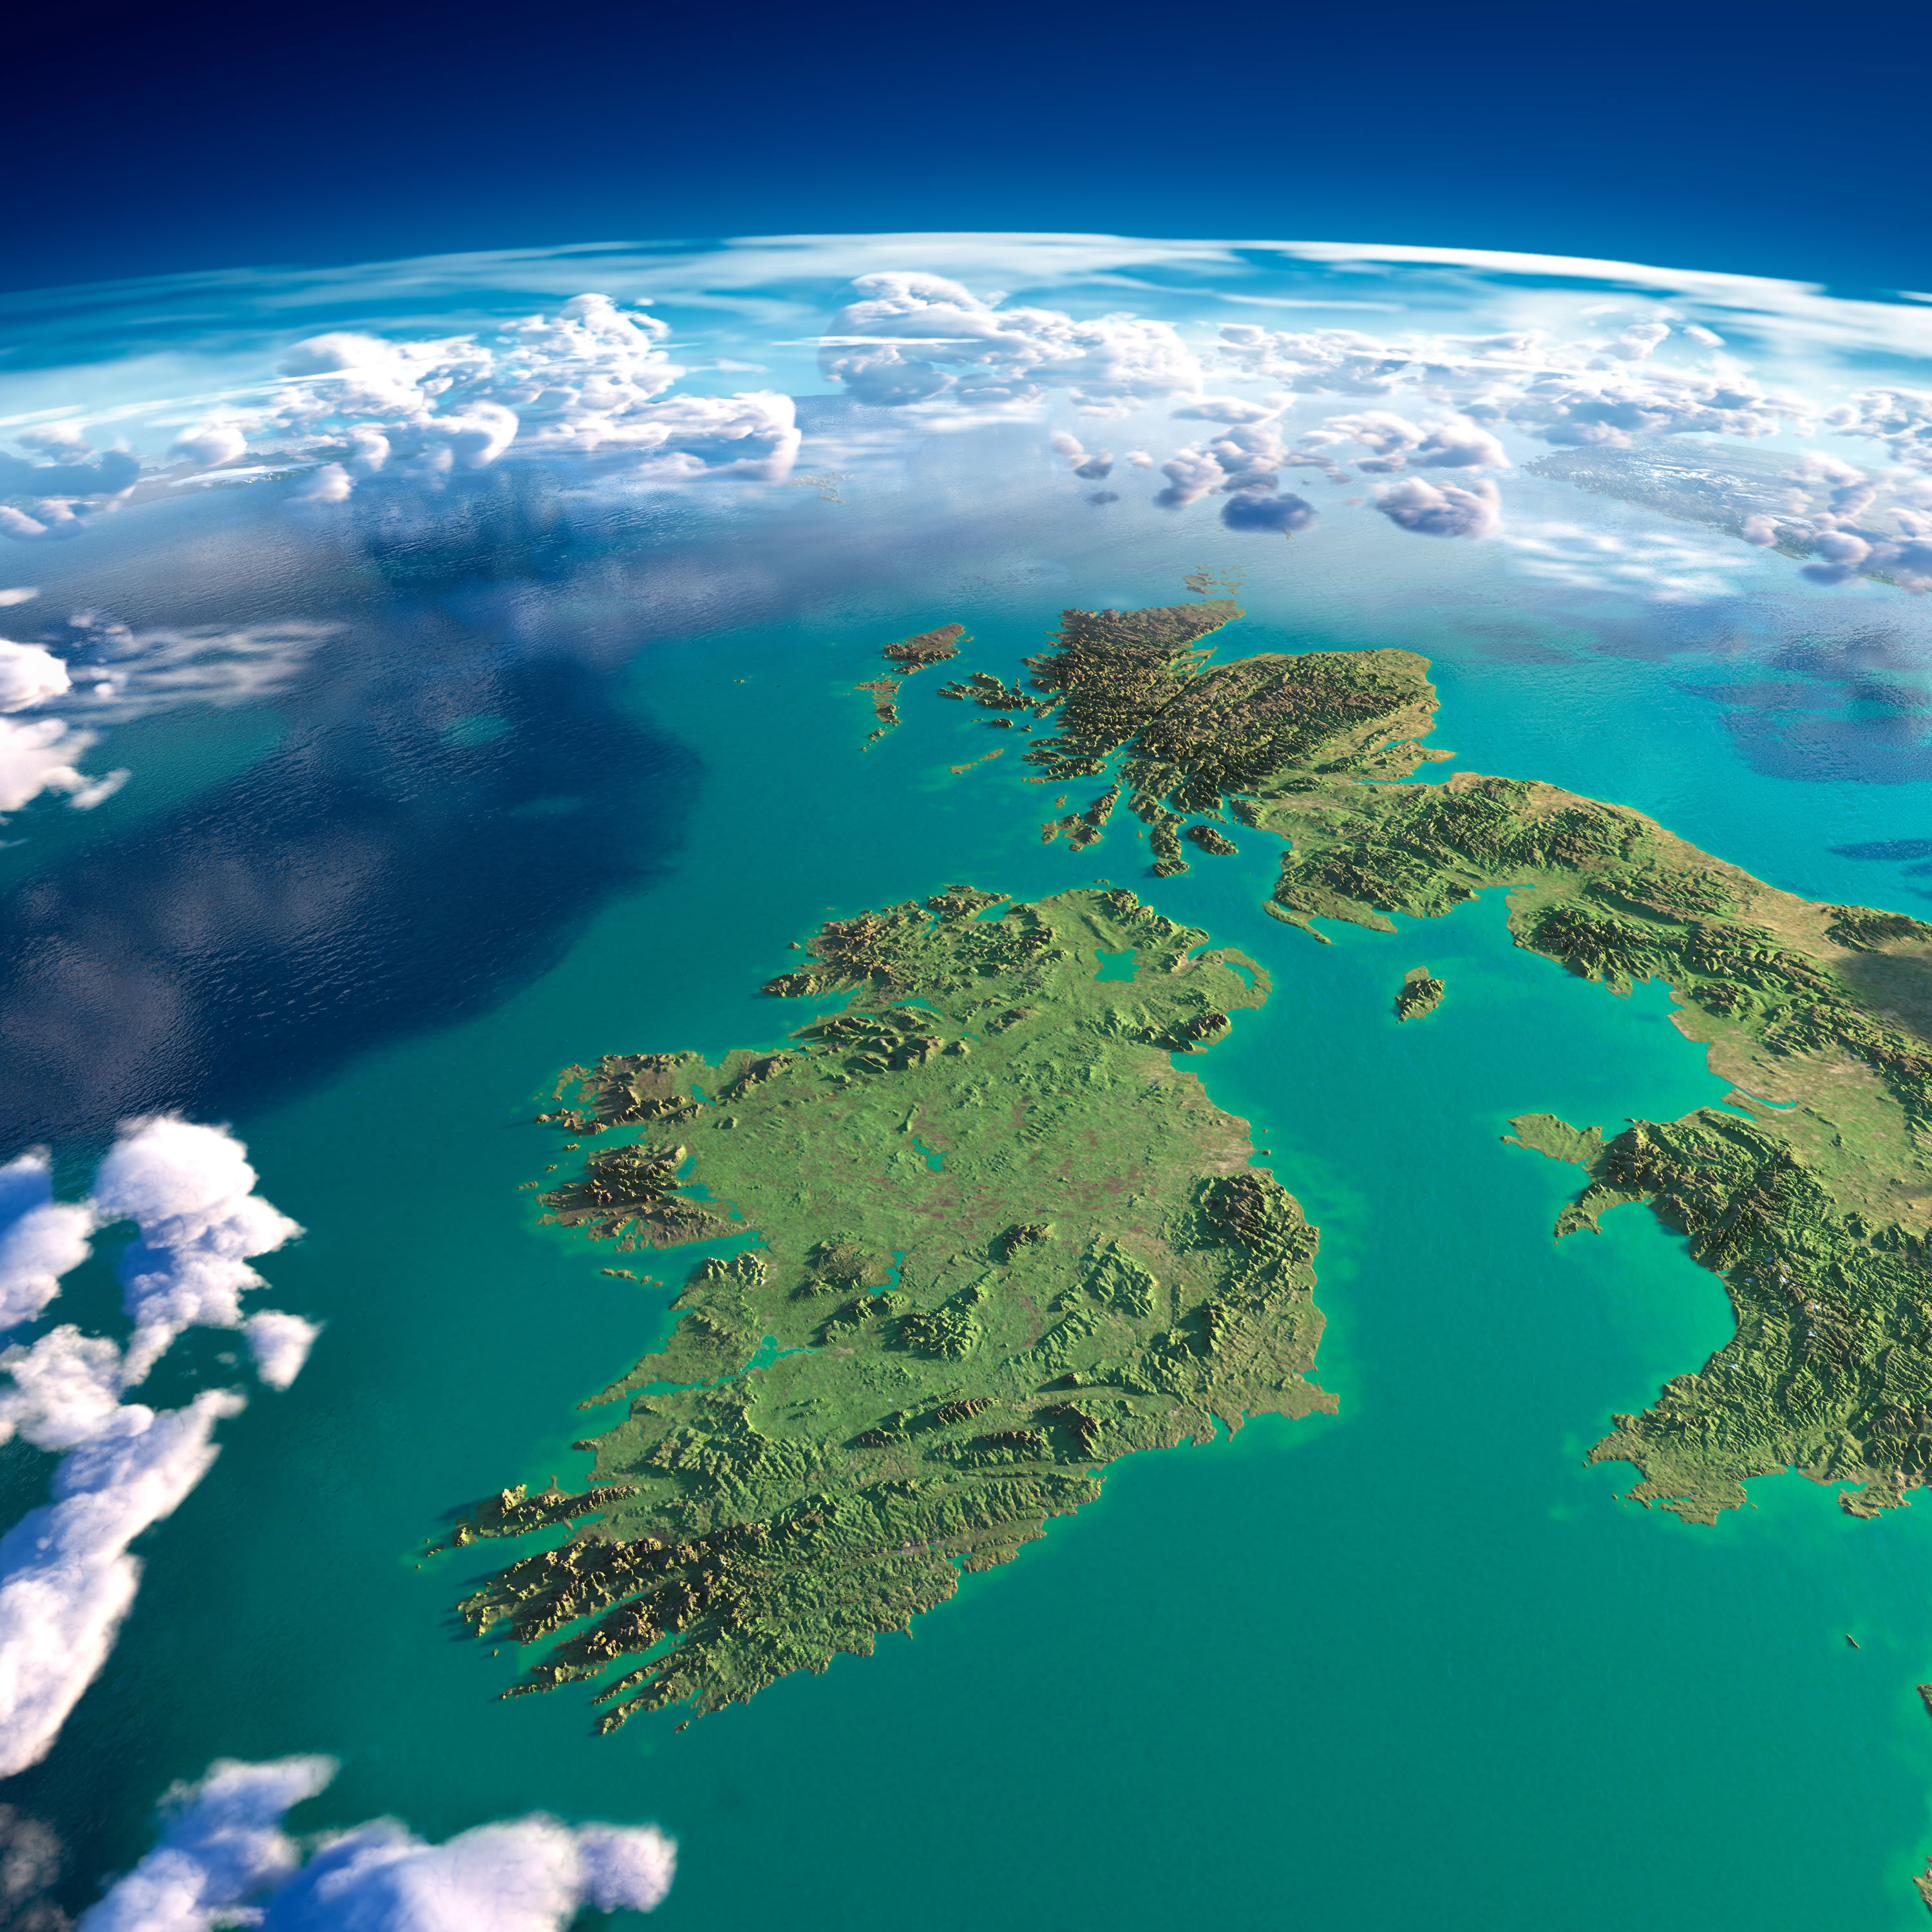 Ireland Satellite Map